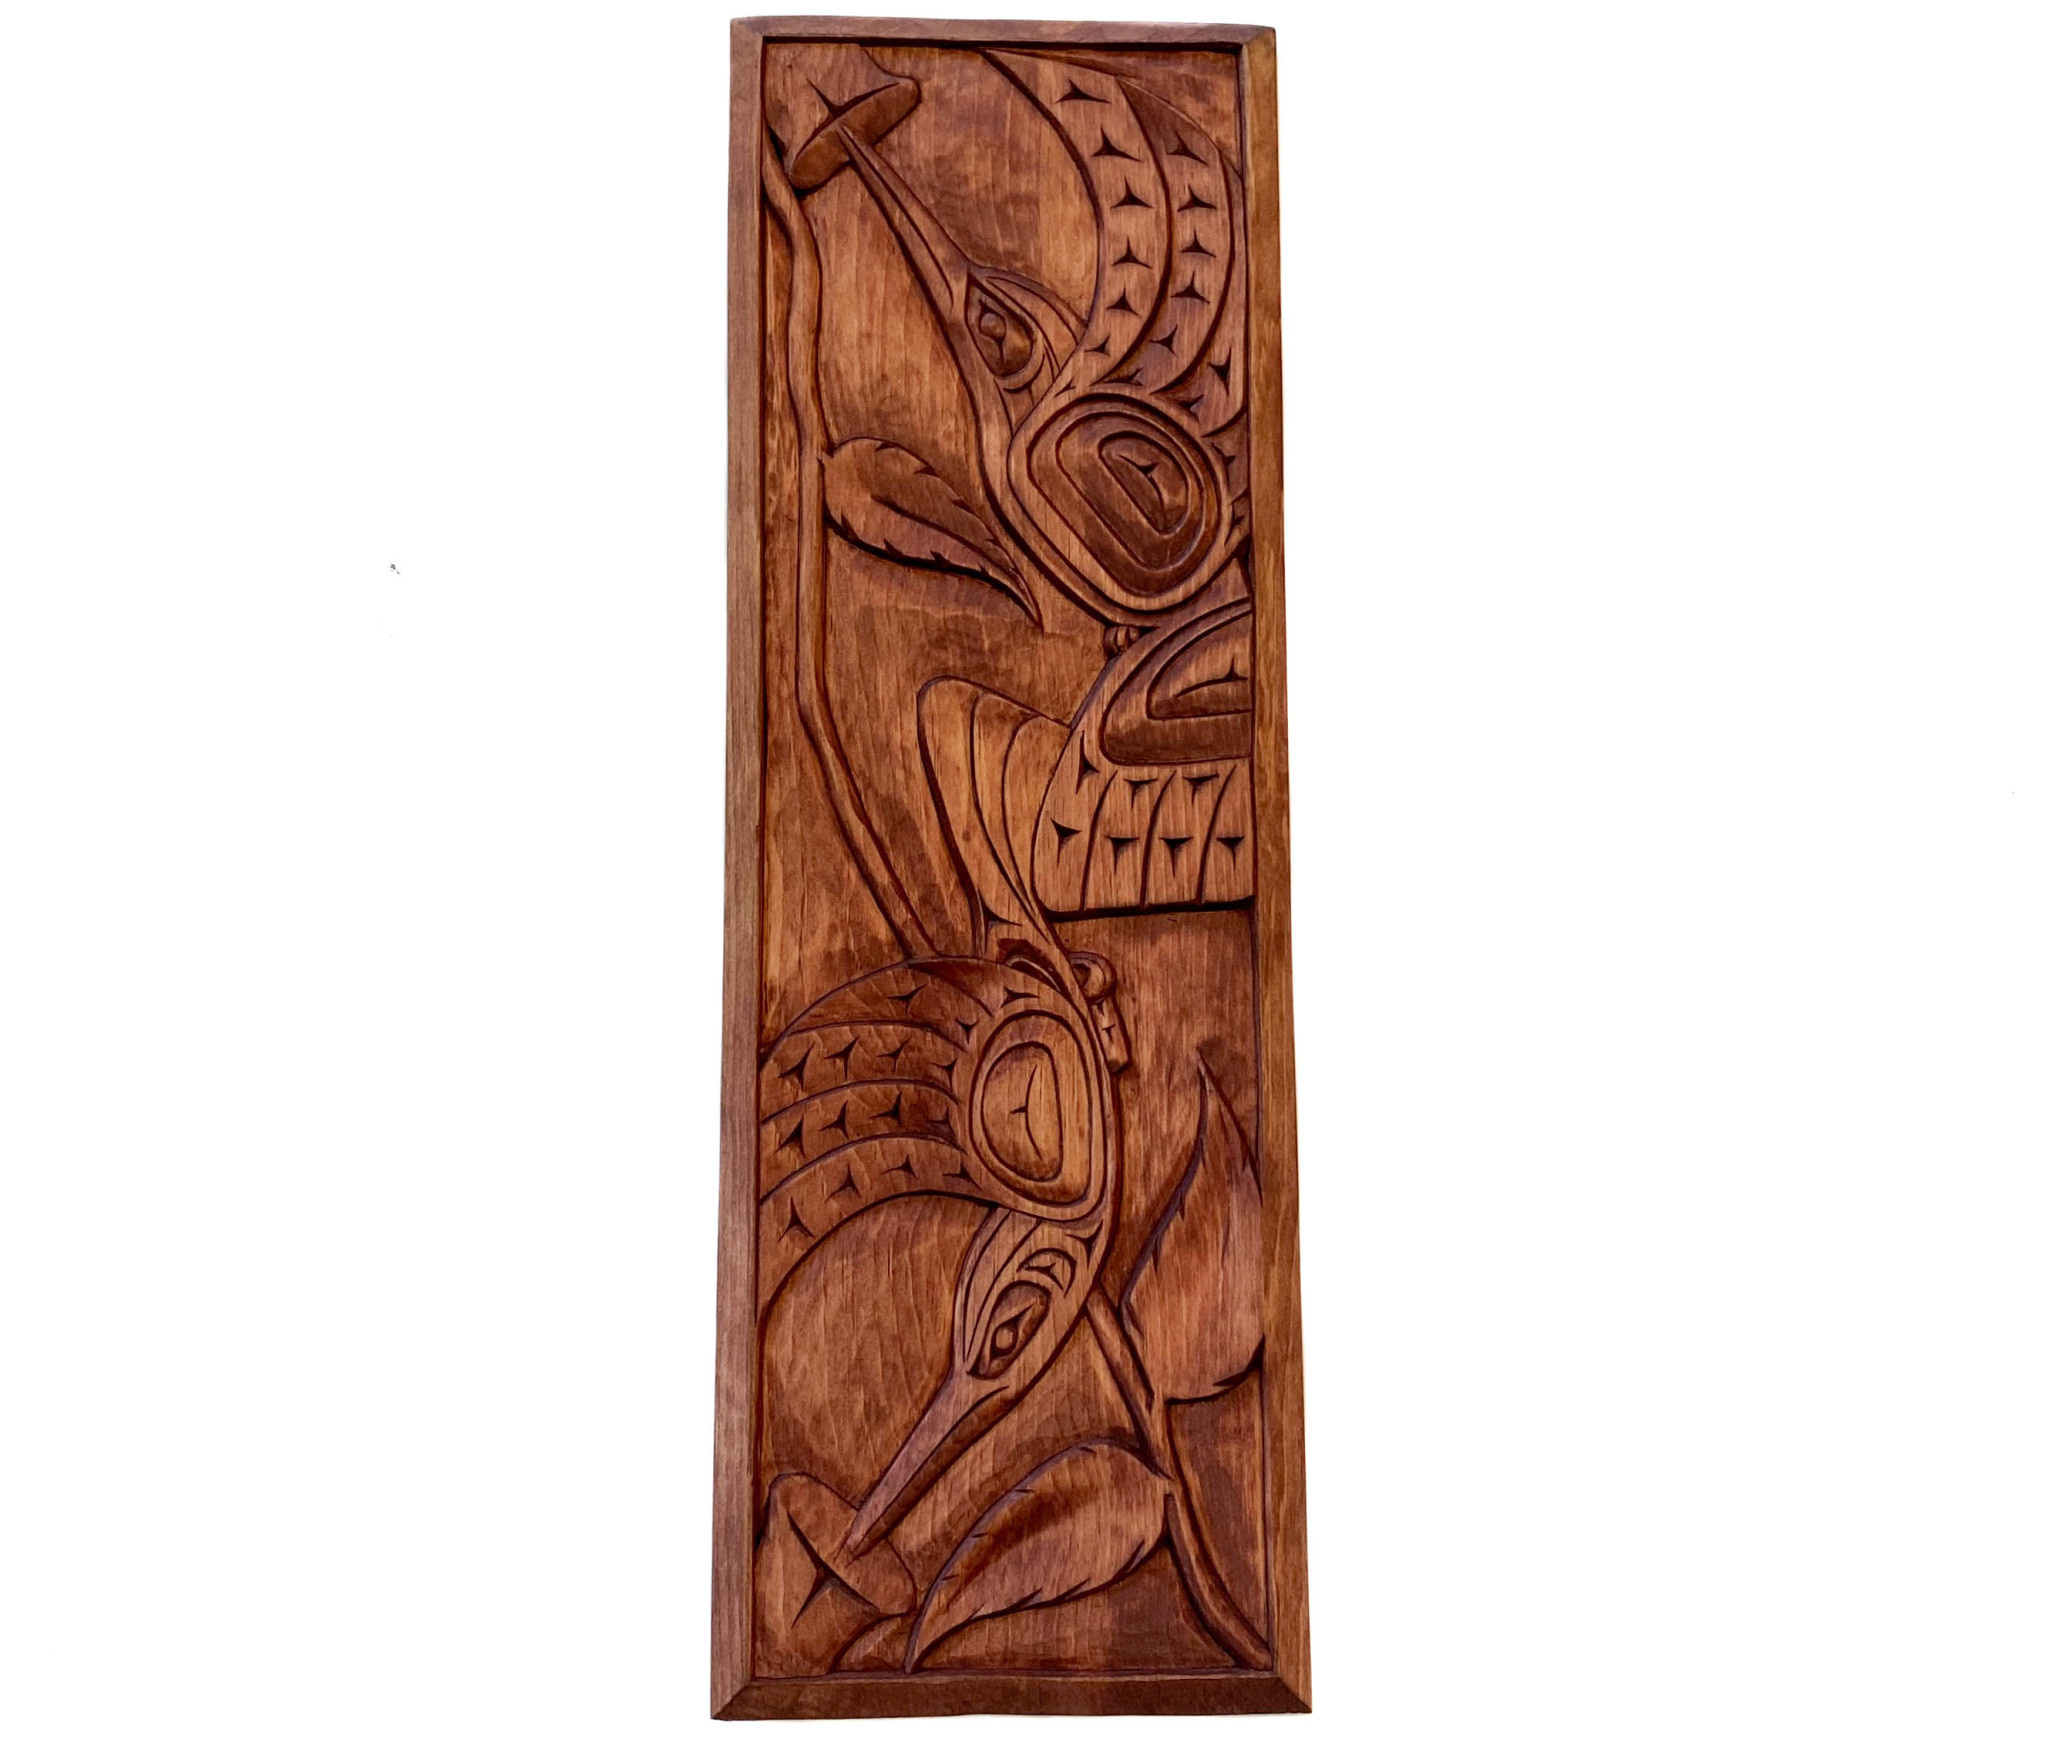 Indigenous Art Hummingbird Panel